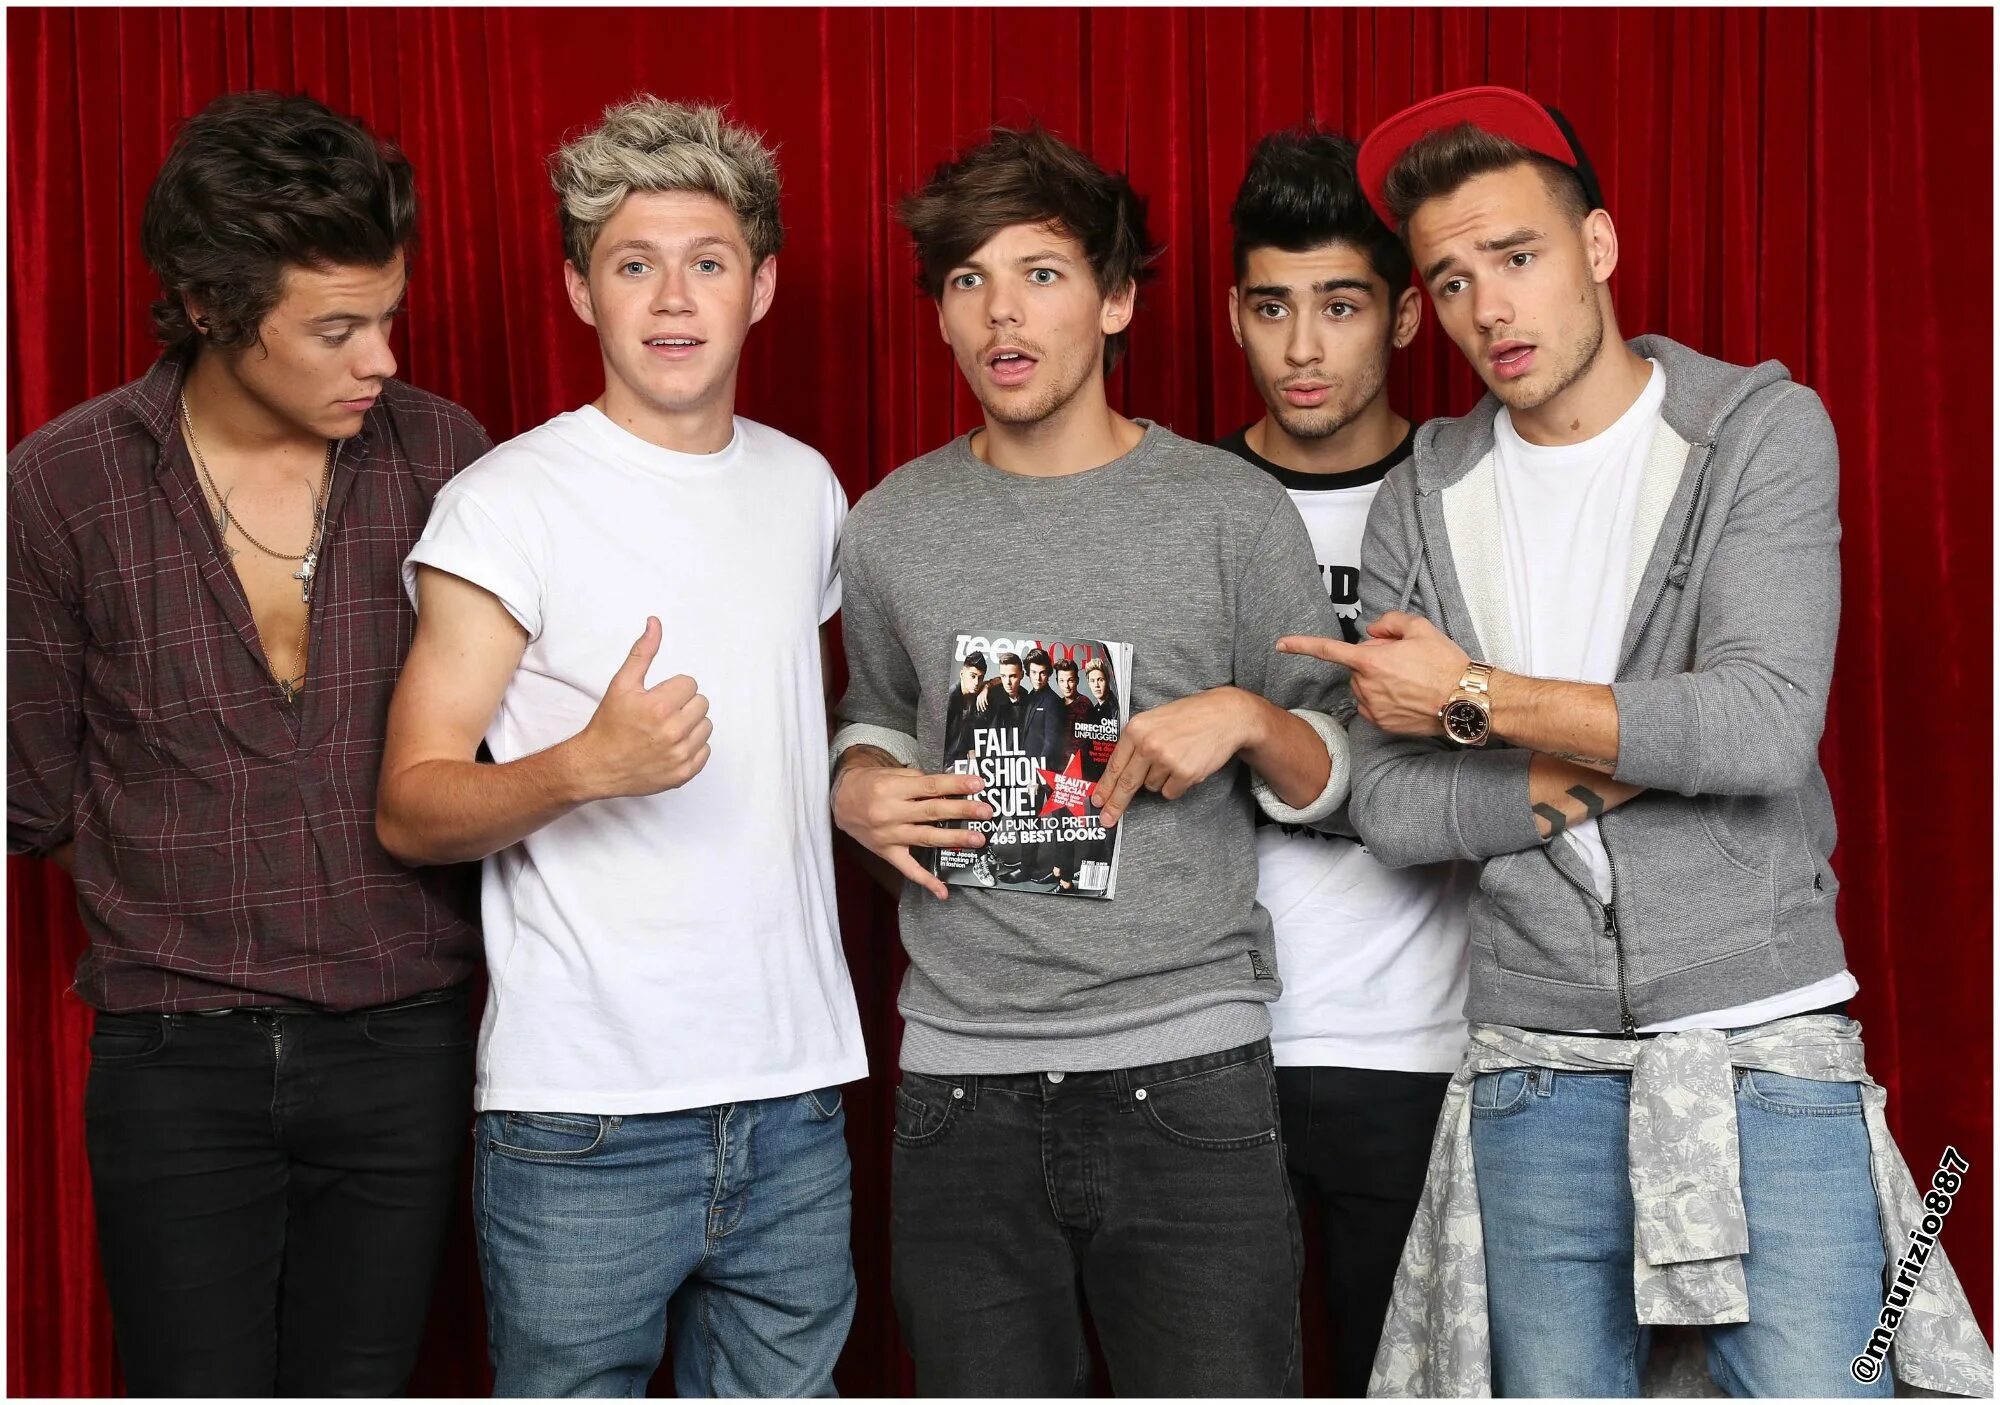 Картинки оне. One Direction 2013. Ван дирекшен участники. One Direction фотосессии 2013. One Direction фото 2013.